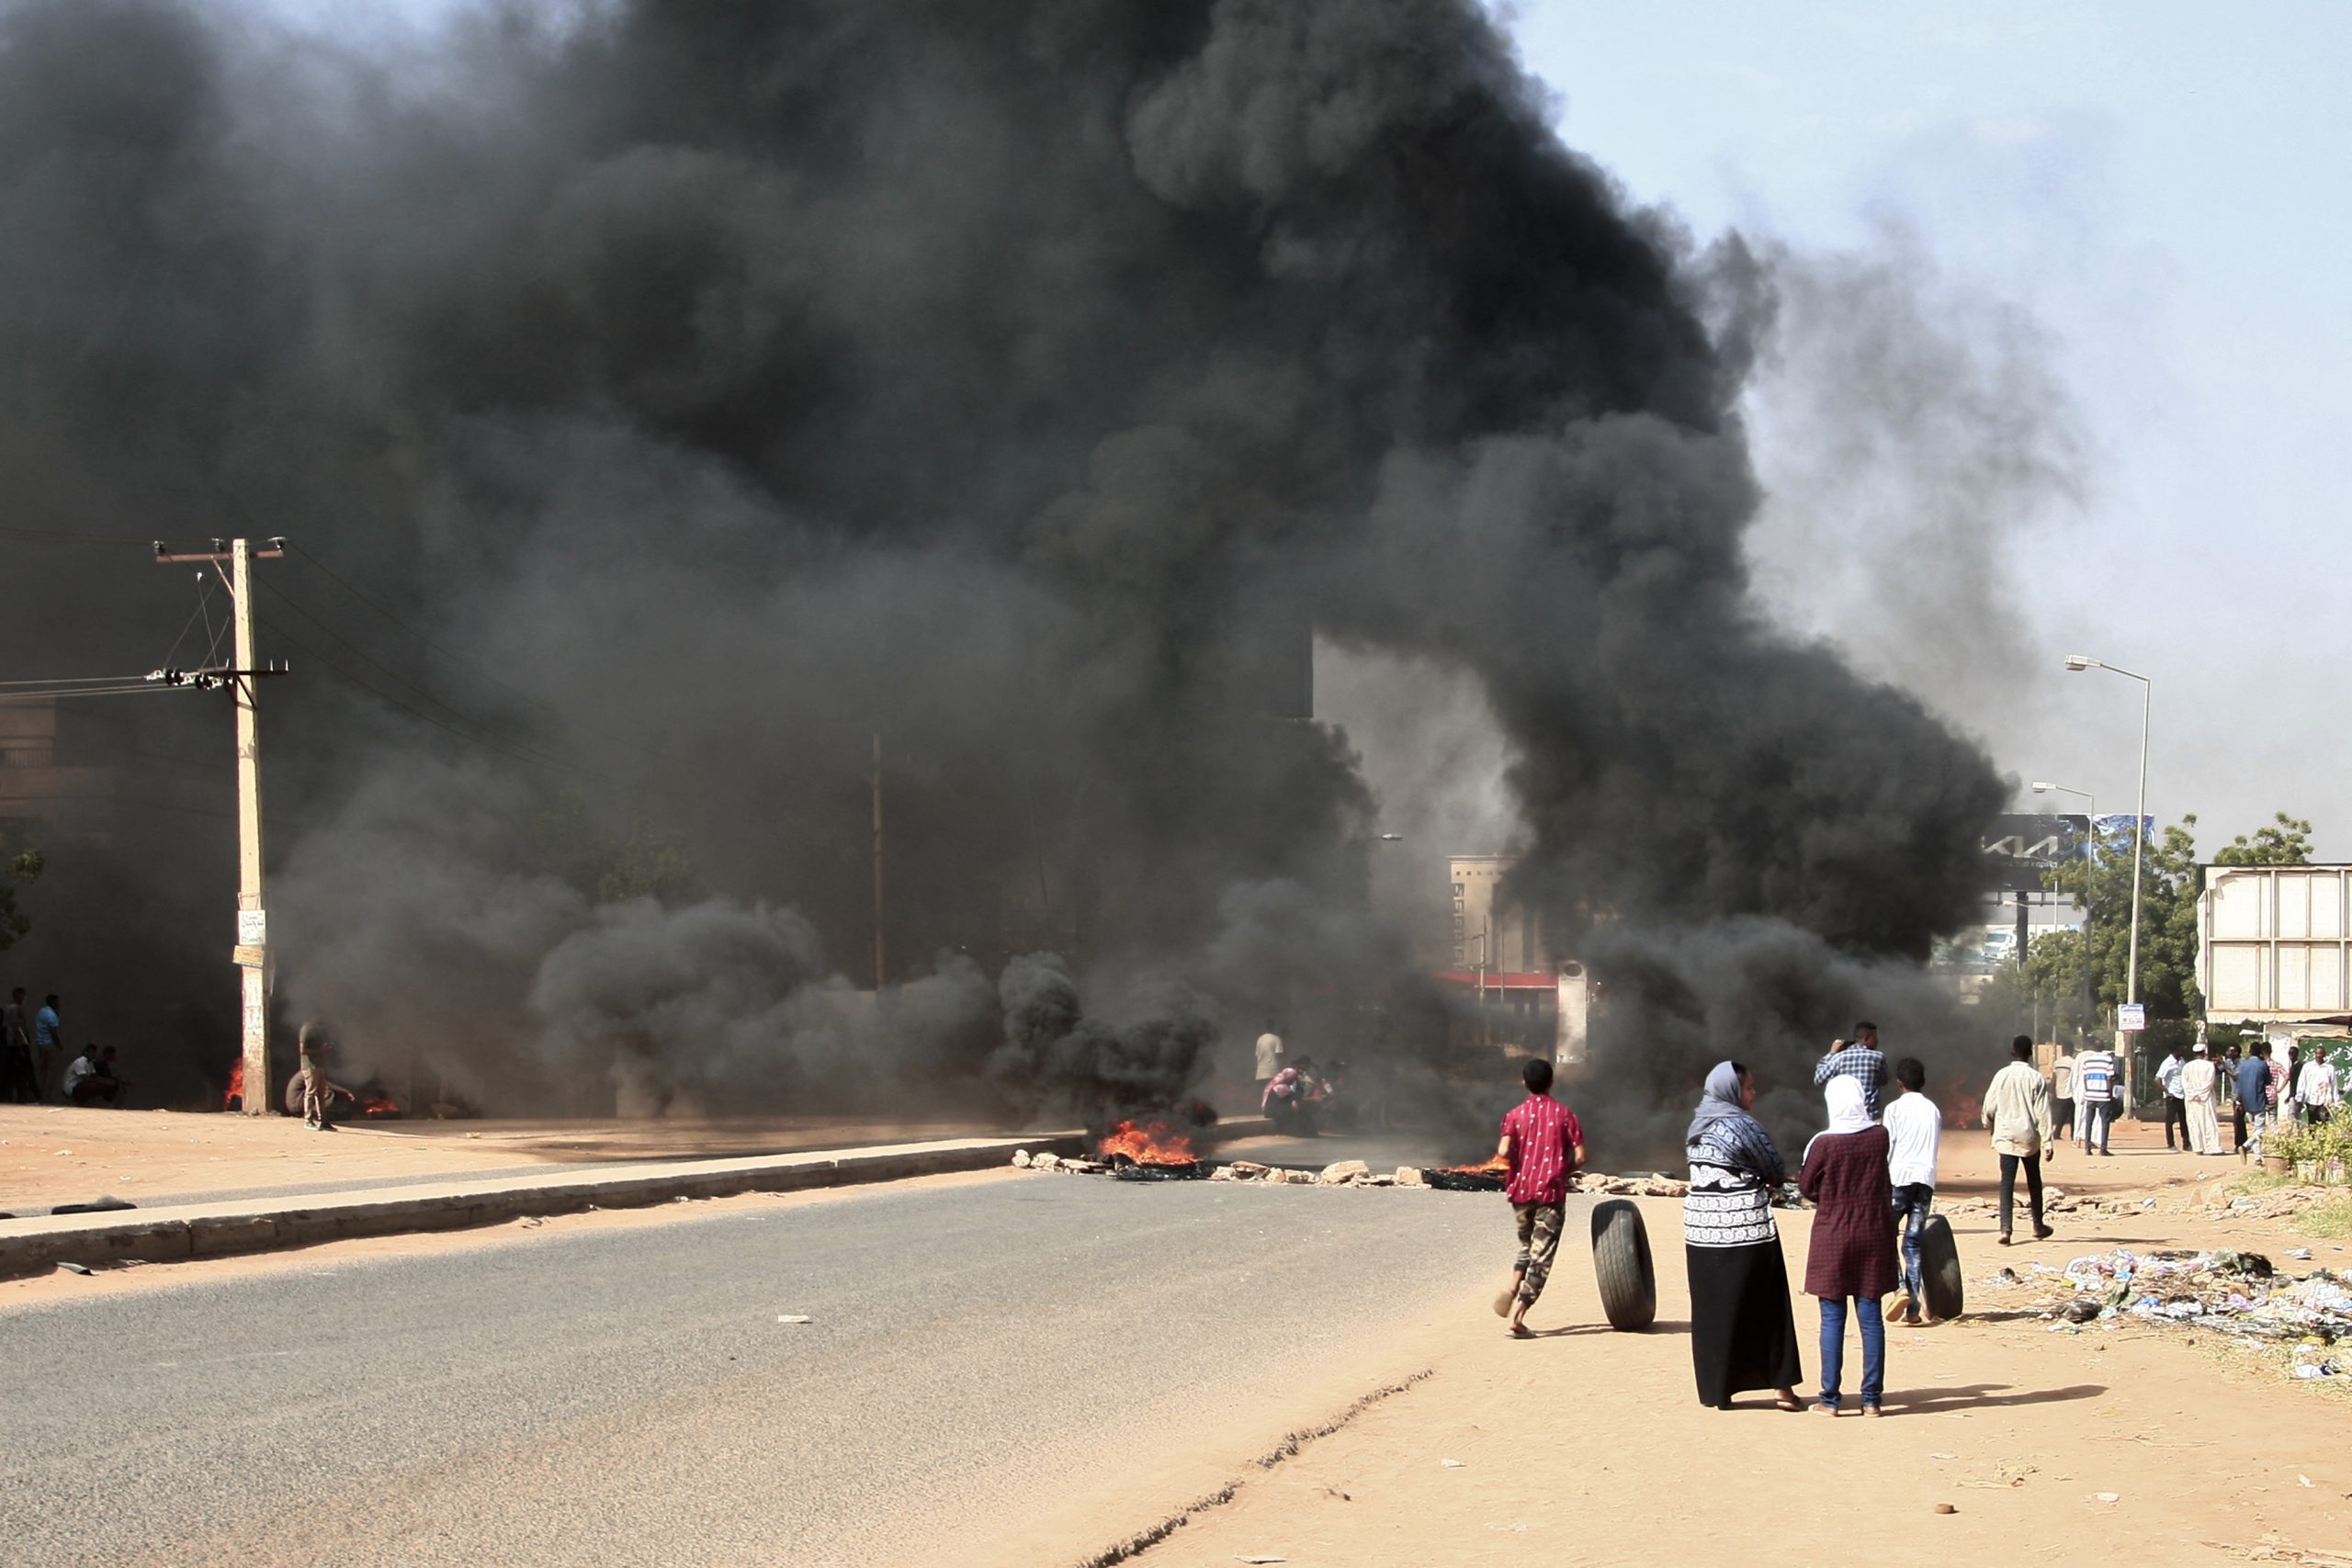 From al-Mahdi to al-Hura: I reject any coup attempt in Sudan